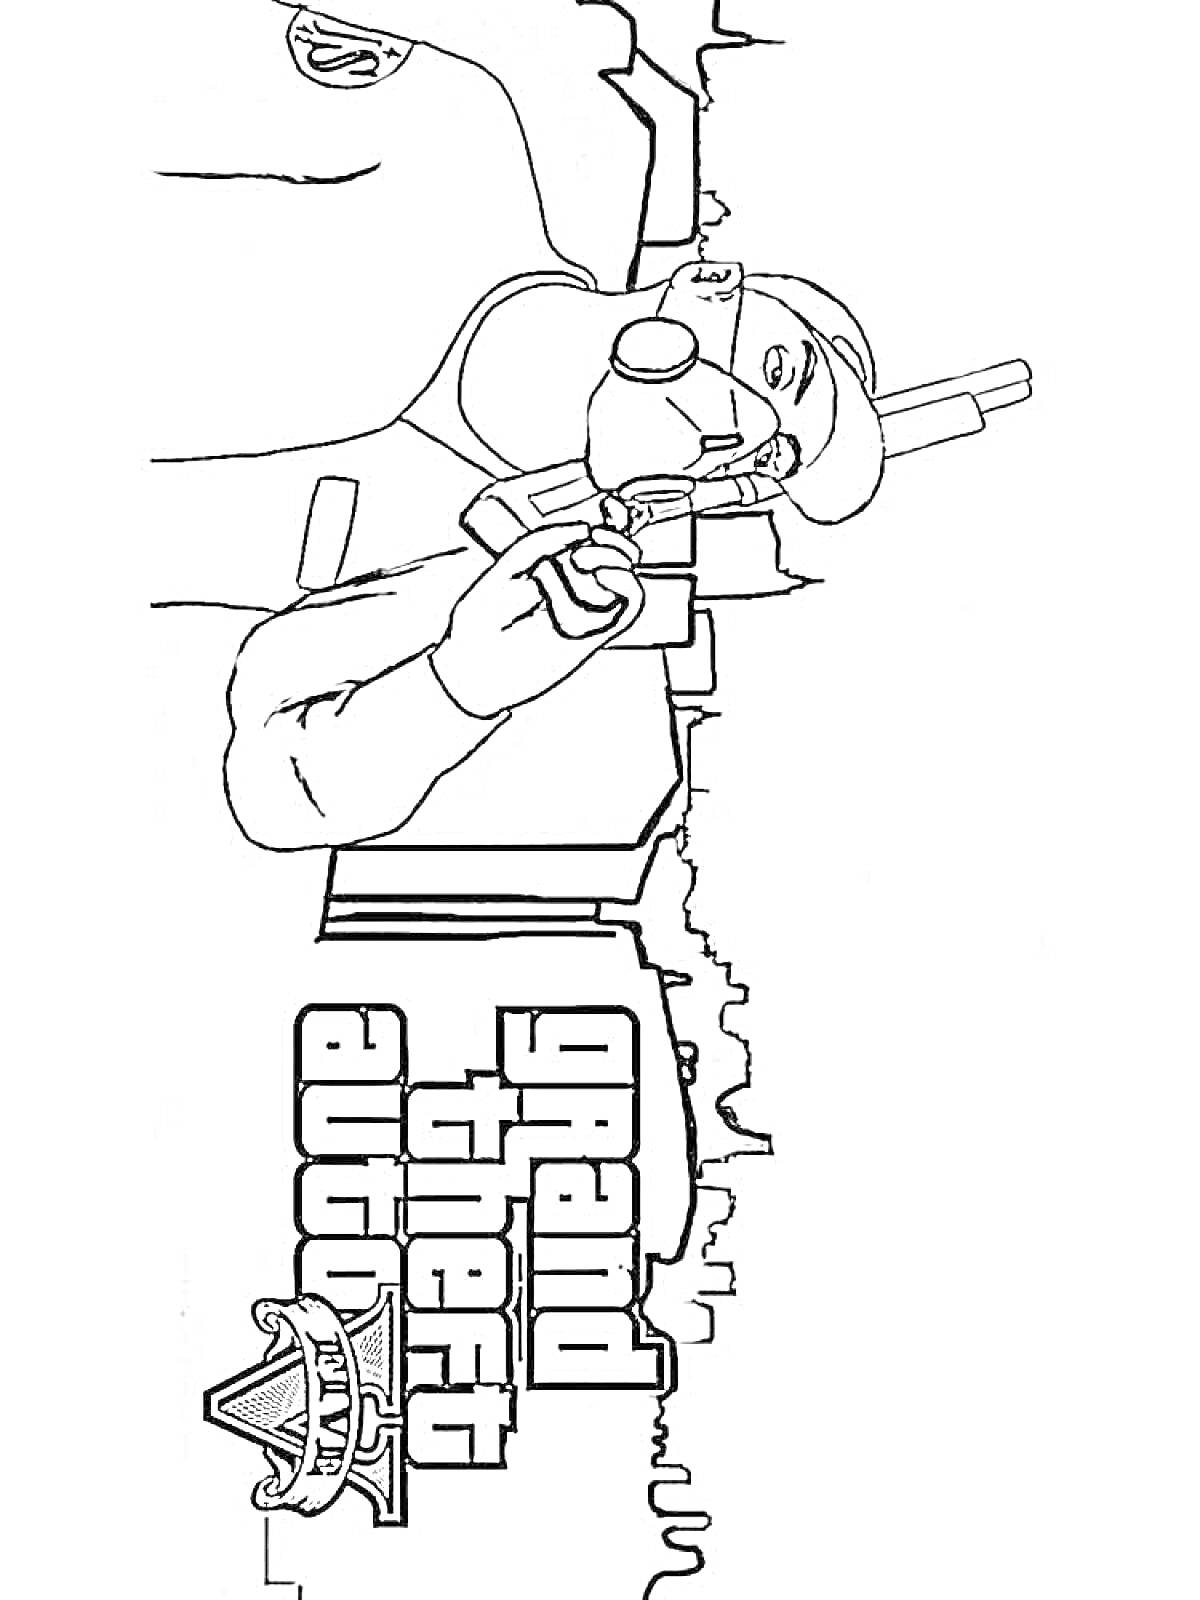 персонаж в маске с оружием на фоне силуэта города и логотипа Grand Theft Auto V